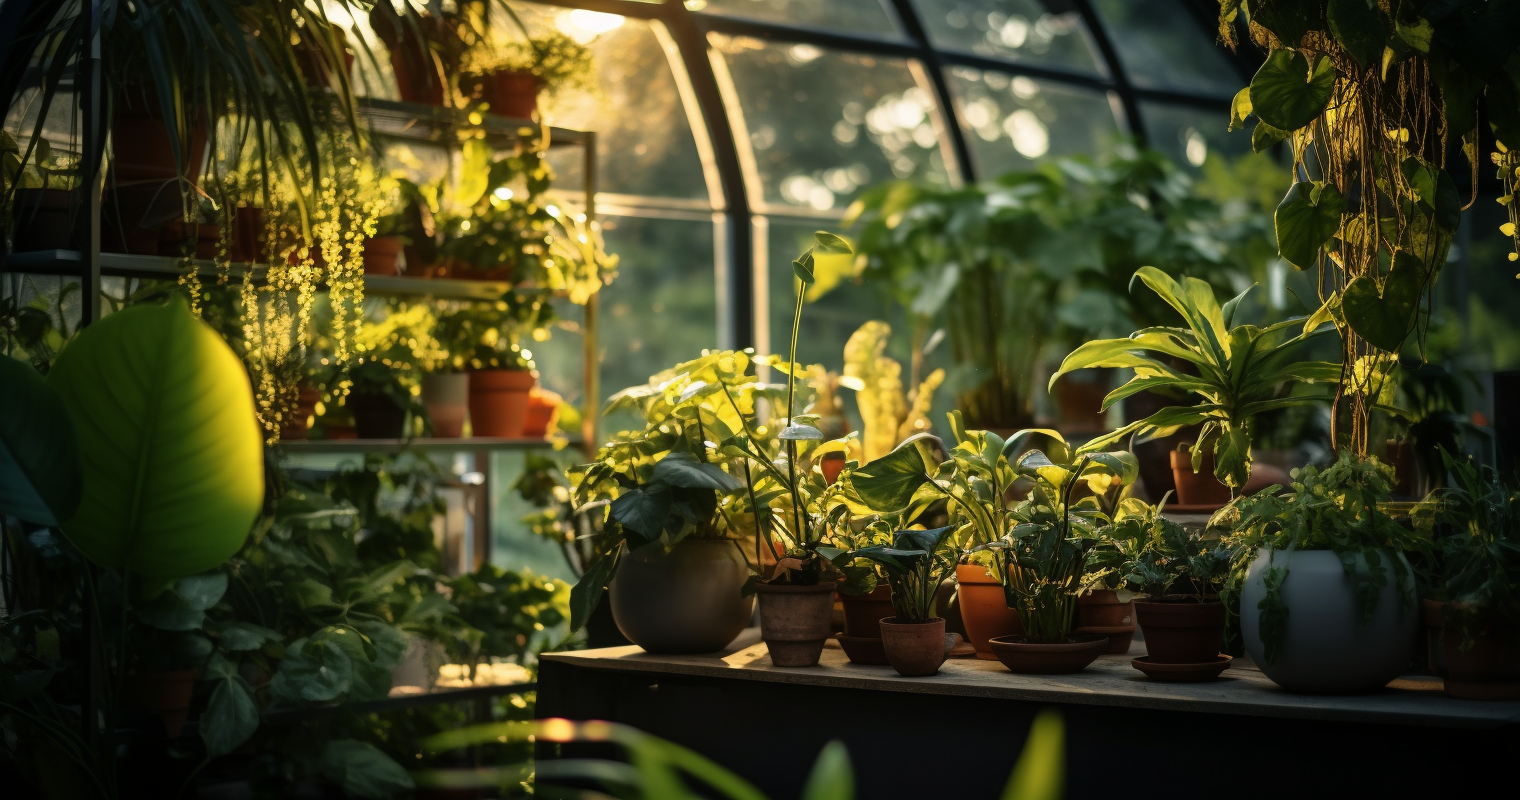 How Long To Leave Grow Lights On Houseplants: Lighting Guide